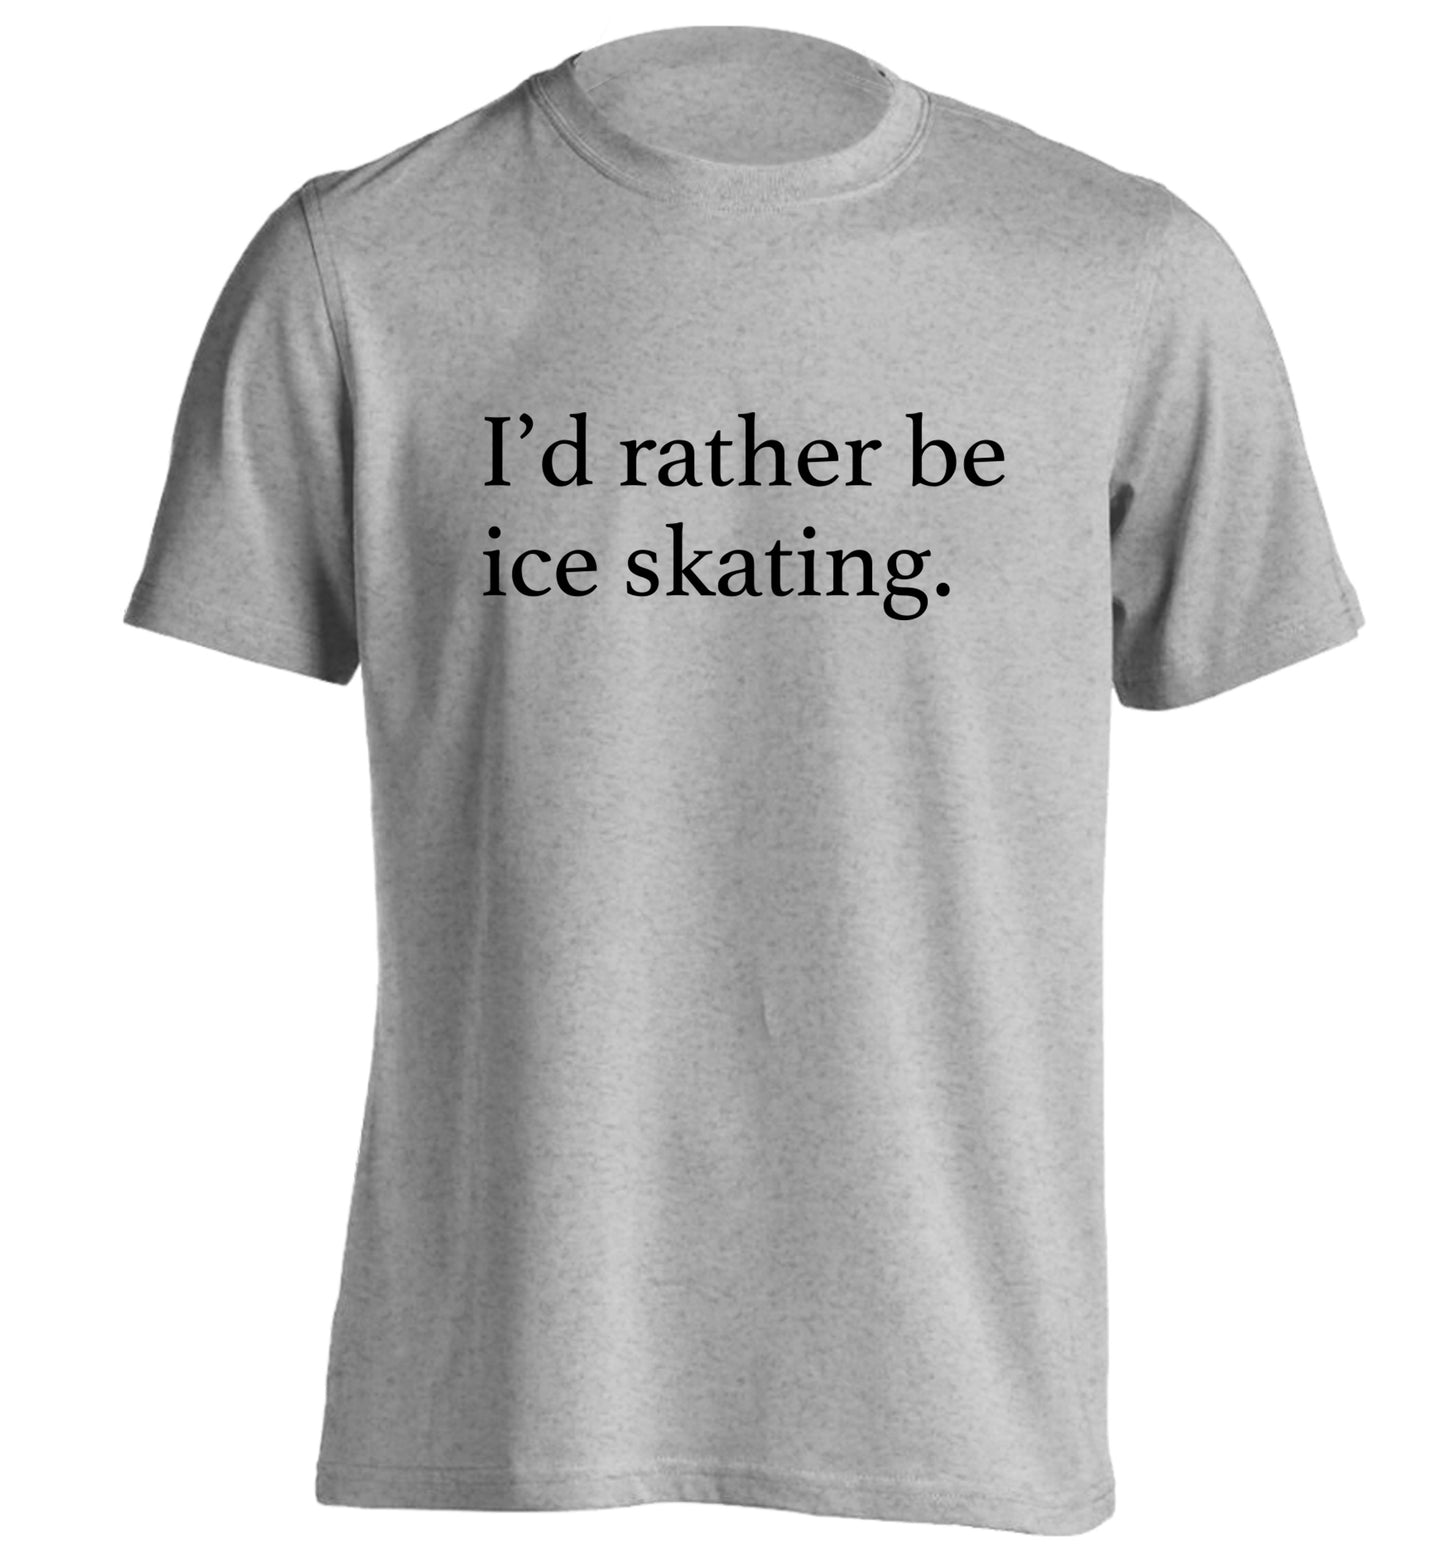 I'd rather be ice skating adults unisexgrey Tshirt 2XL